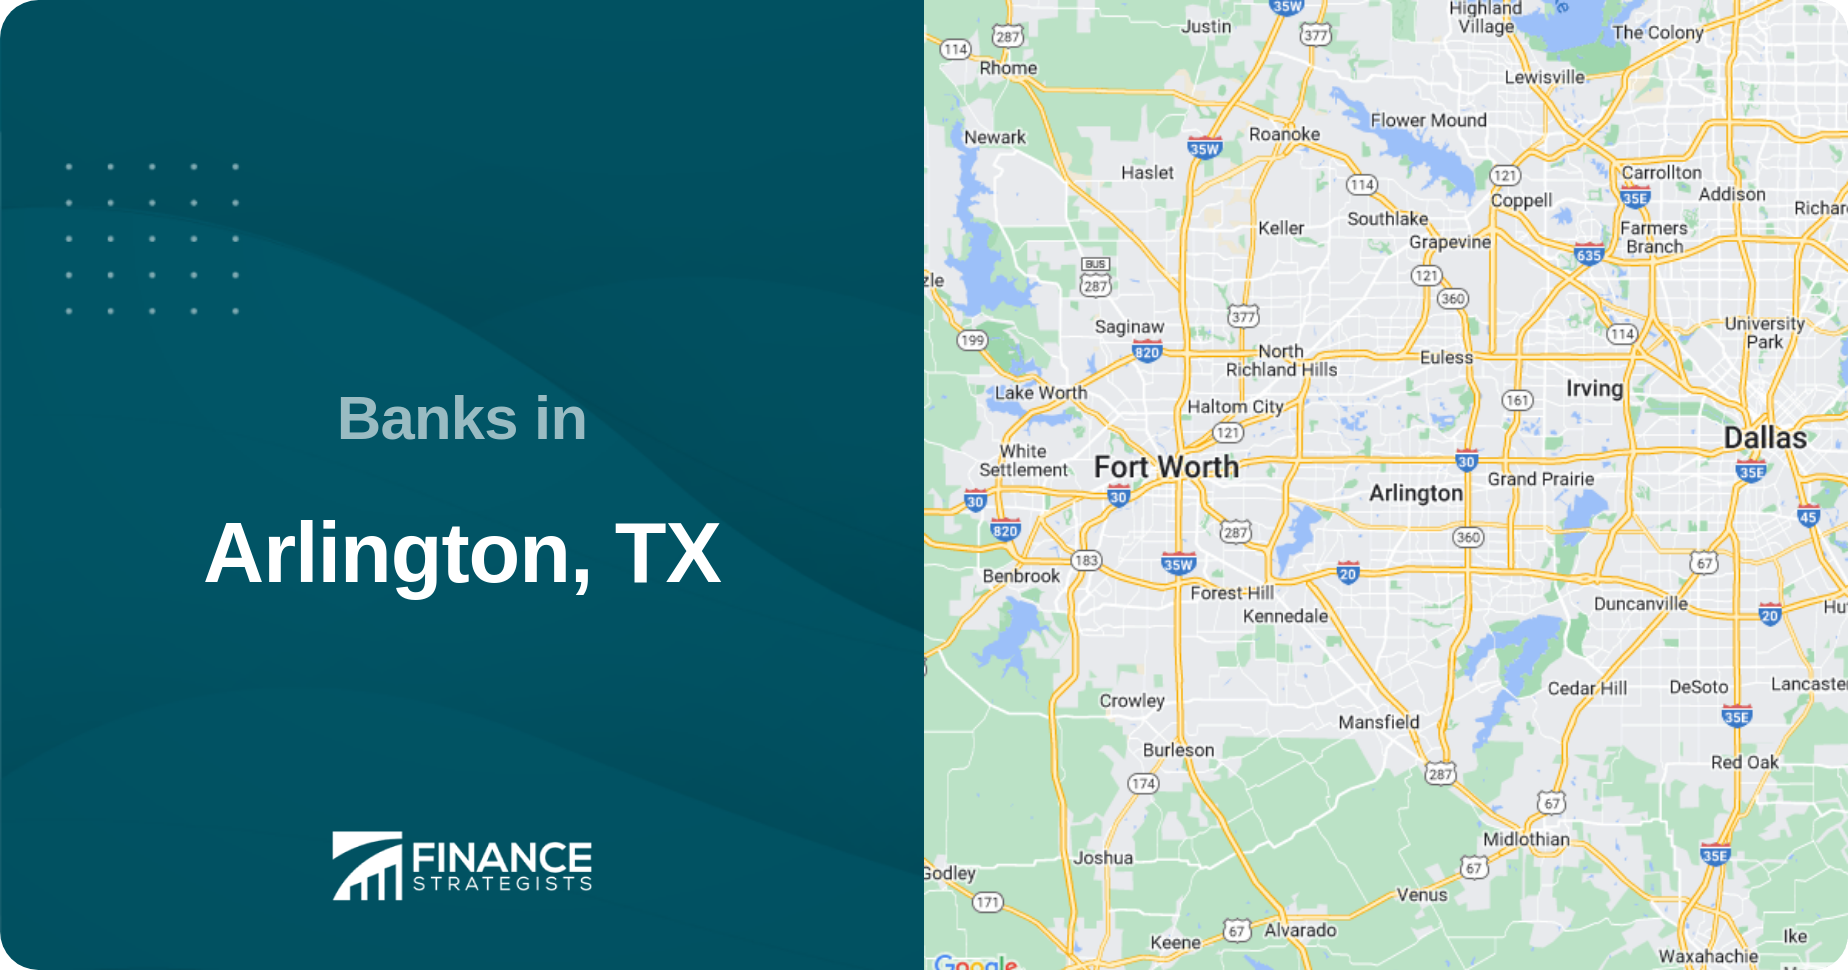 Banks in Arlington, TX